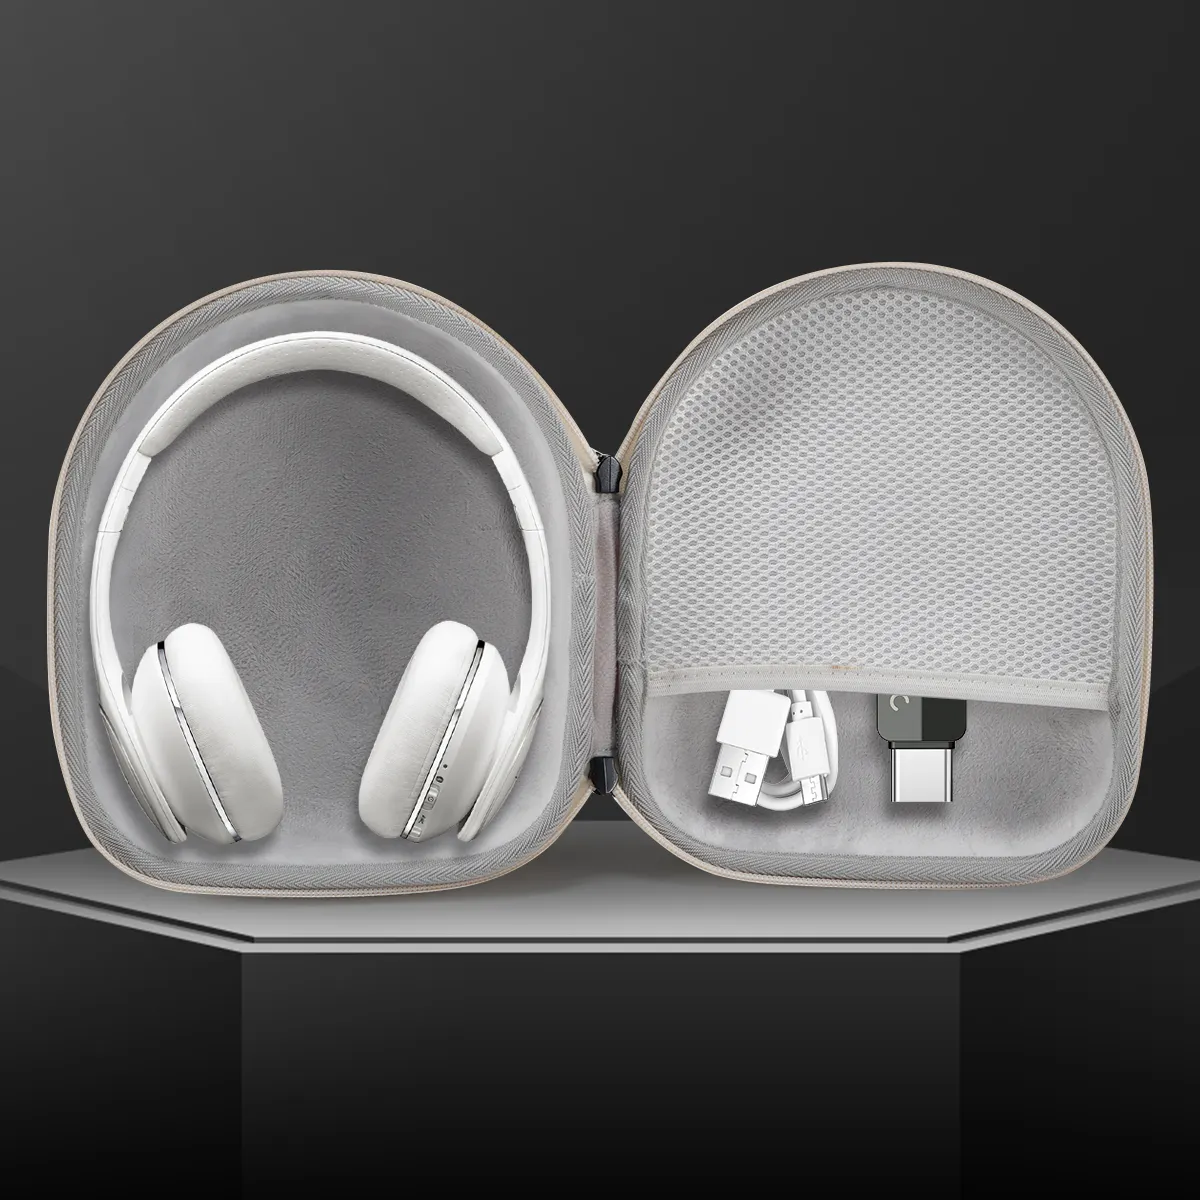 Custom Wireless Headphone EVA Cases with zipper Earphone Data Cable Headset Nylon Hard case bag and accessories